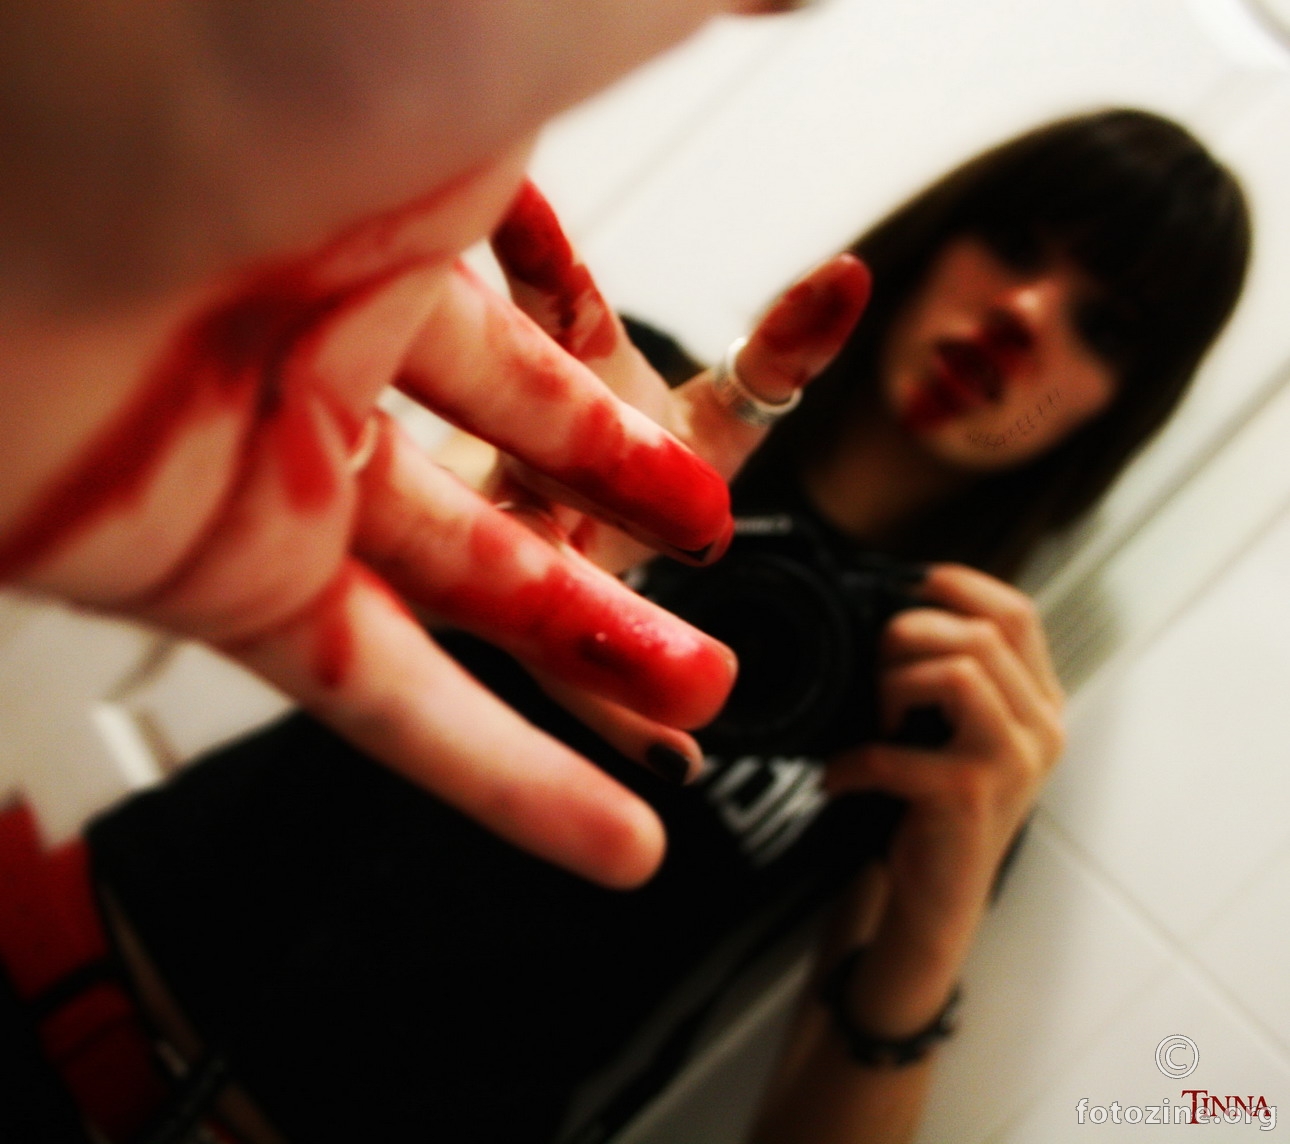 Bleeding to death